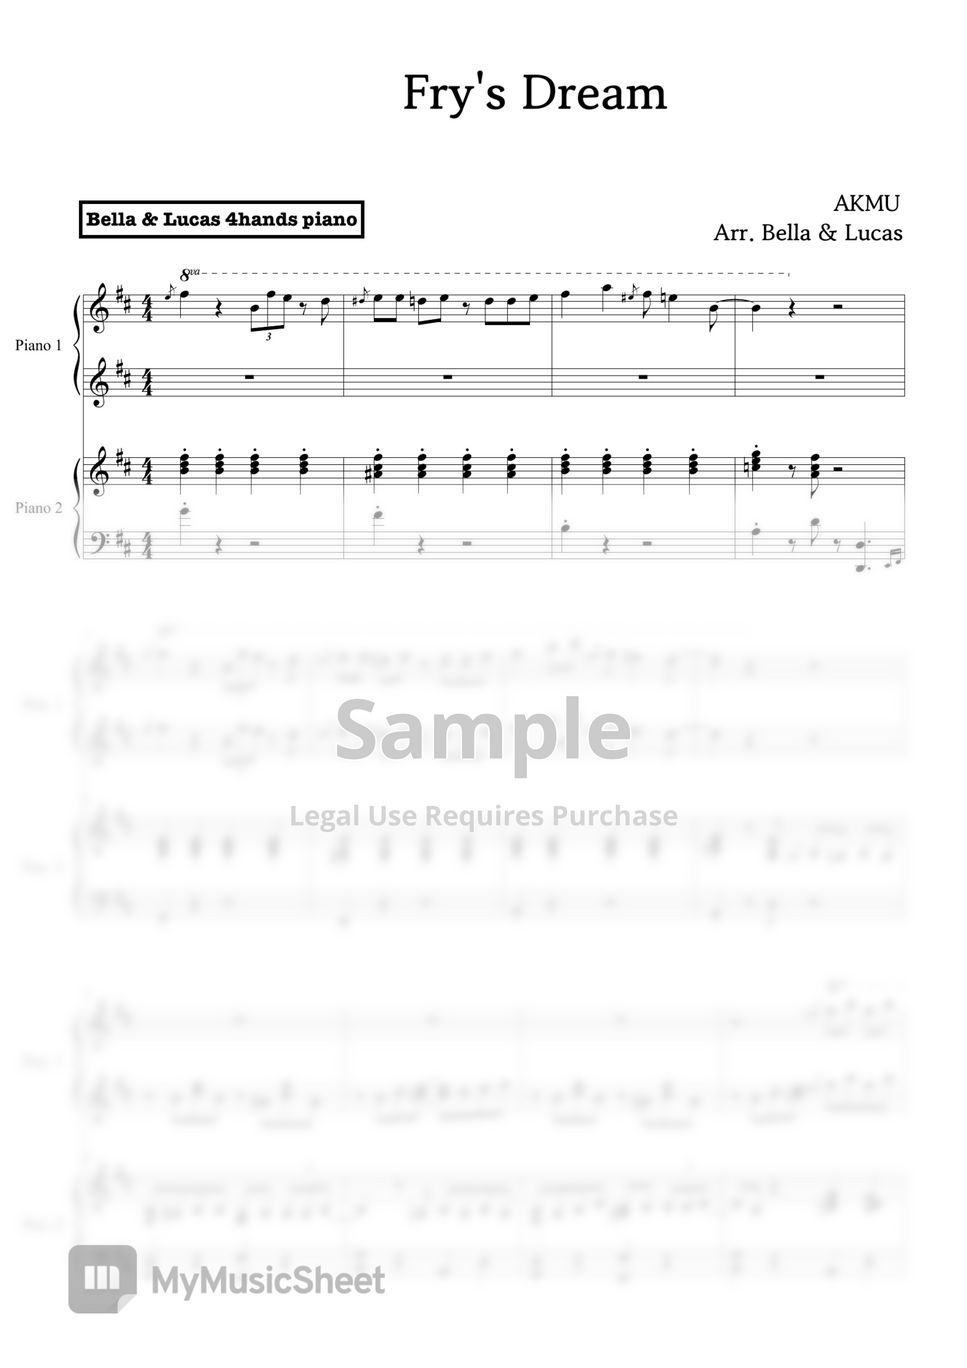 AKMU (4hands piano) - Fry's Dream by BELLA&LUCAS